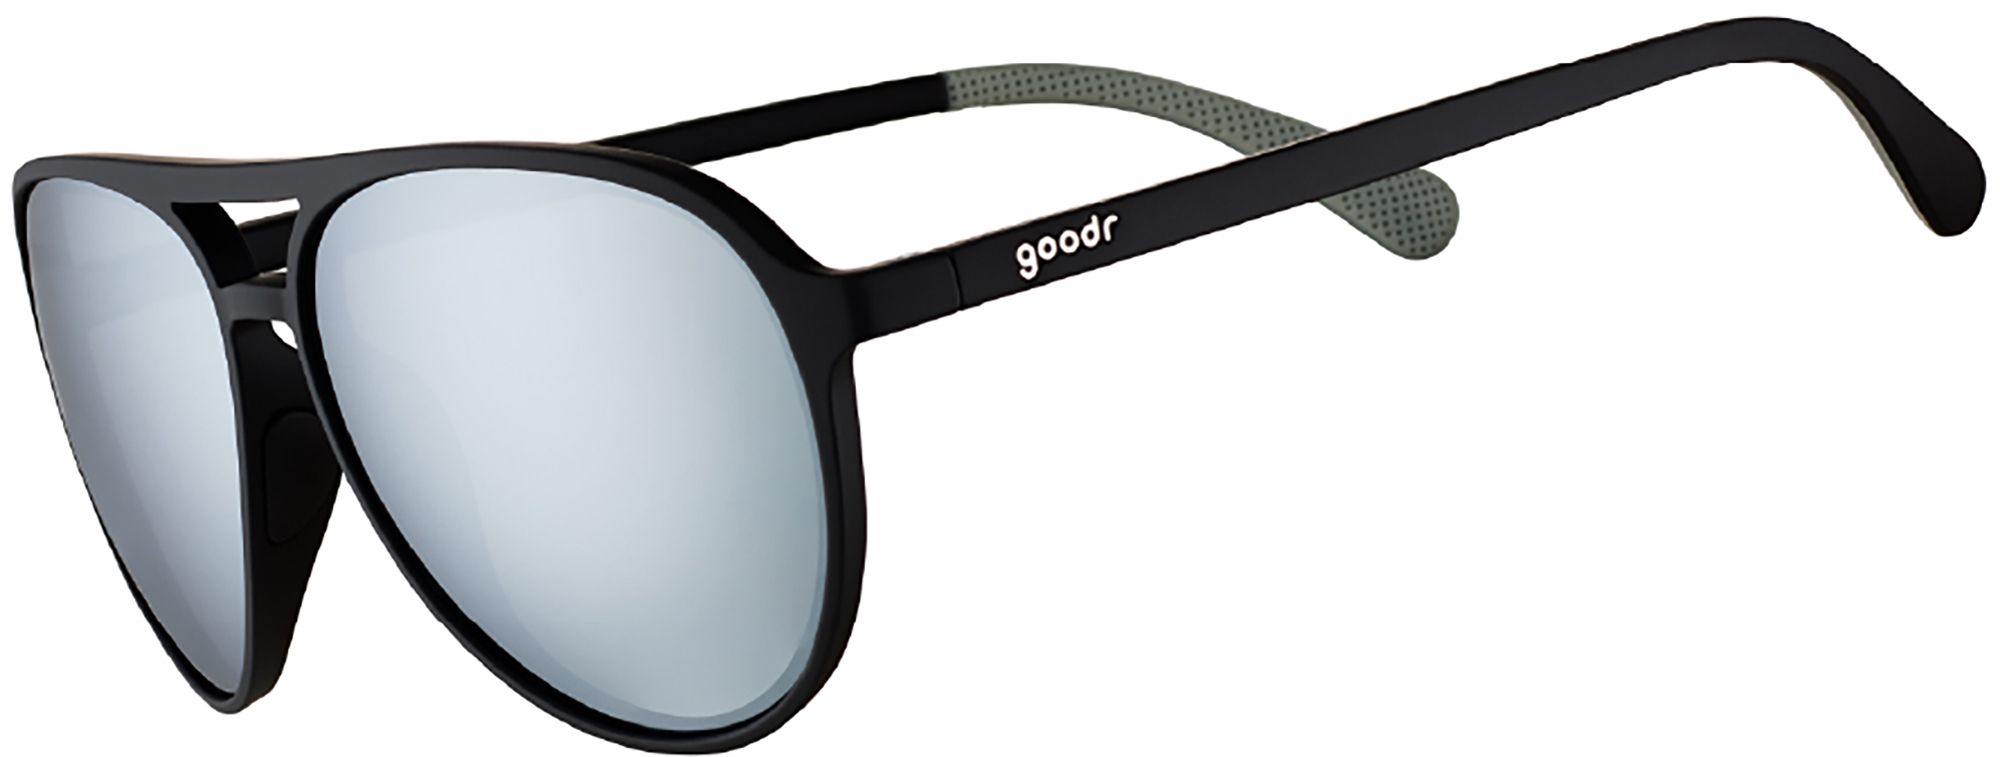 Photos - Sunglasses Goodr Add The Chrome Package Mirror Reflective , Men's, Black Fr